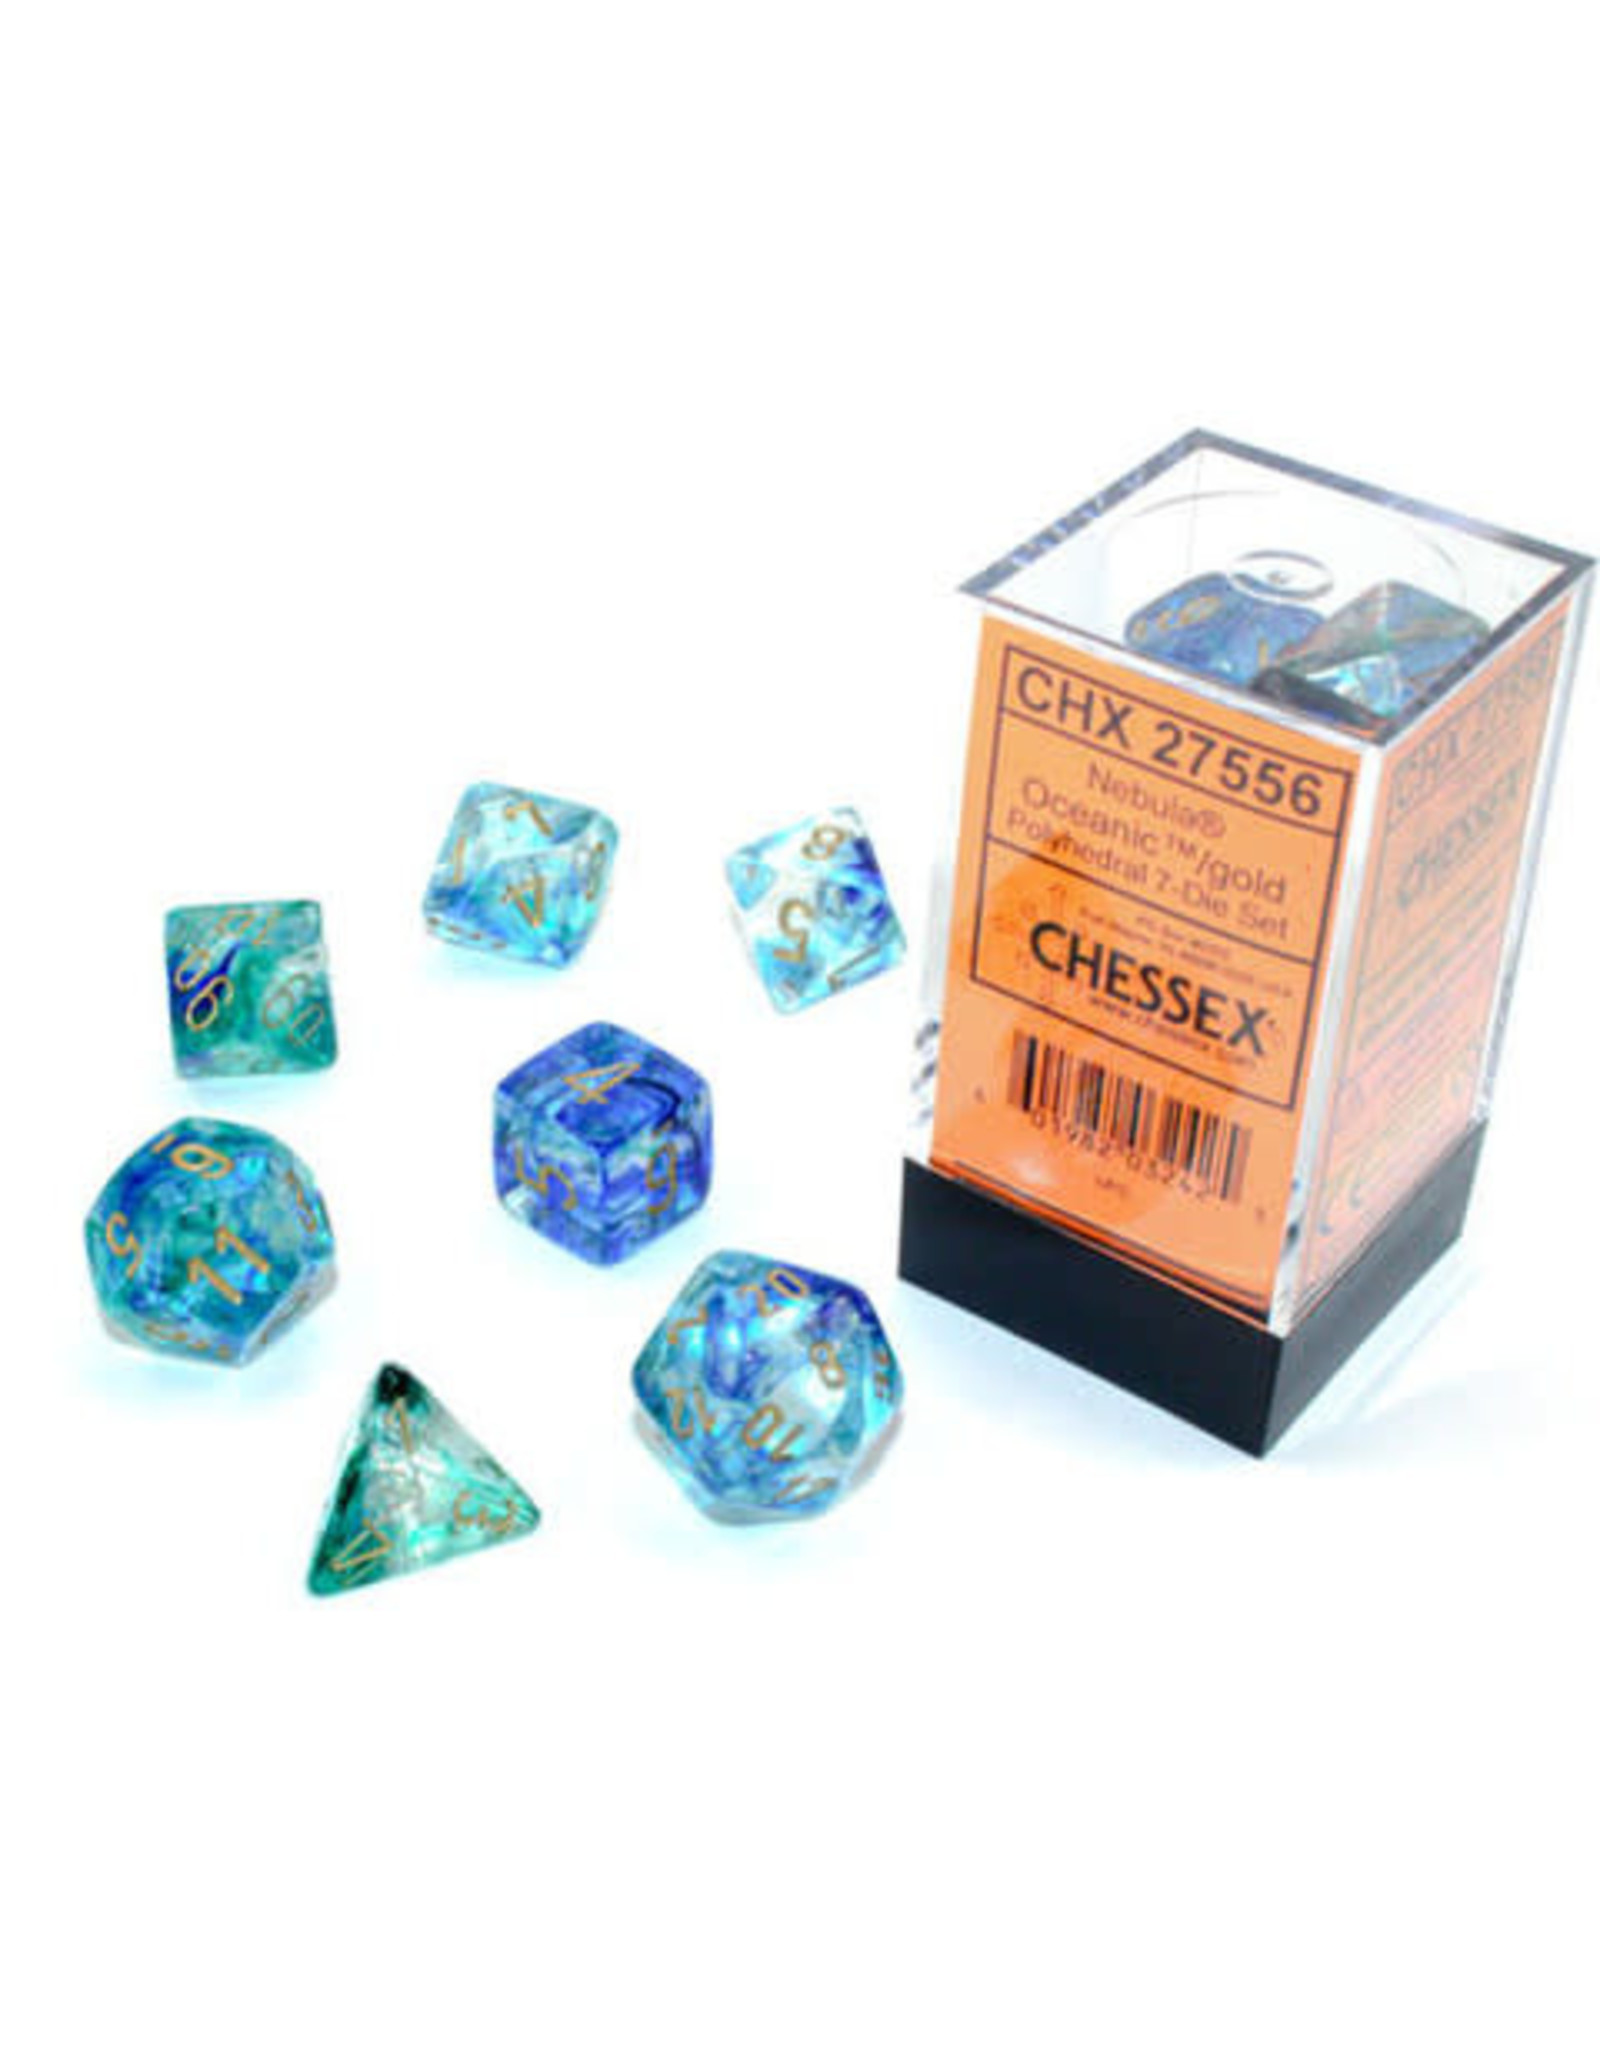 Chessex CHX27556 Nebula: Polyhedral Oceanic/gold Luminary 7-Die Set